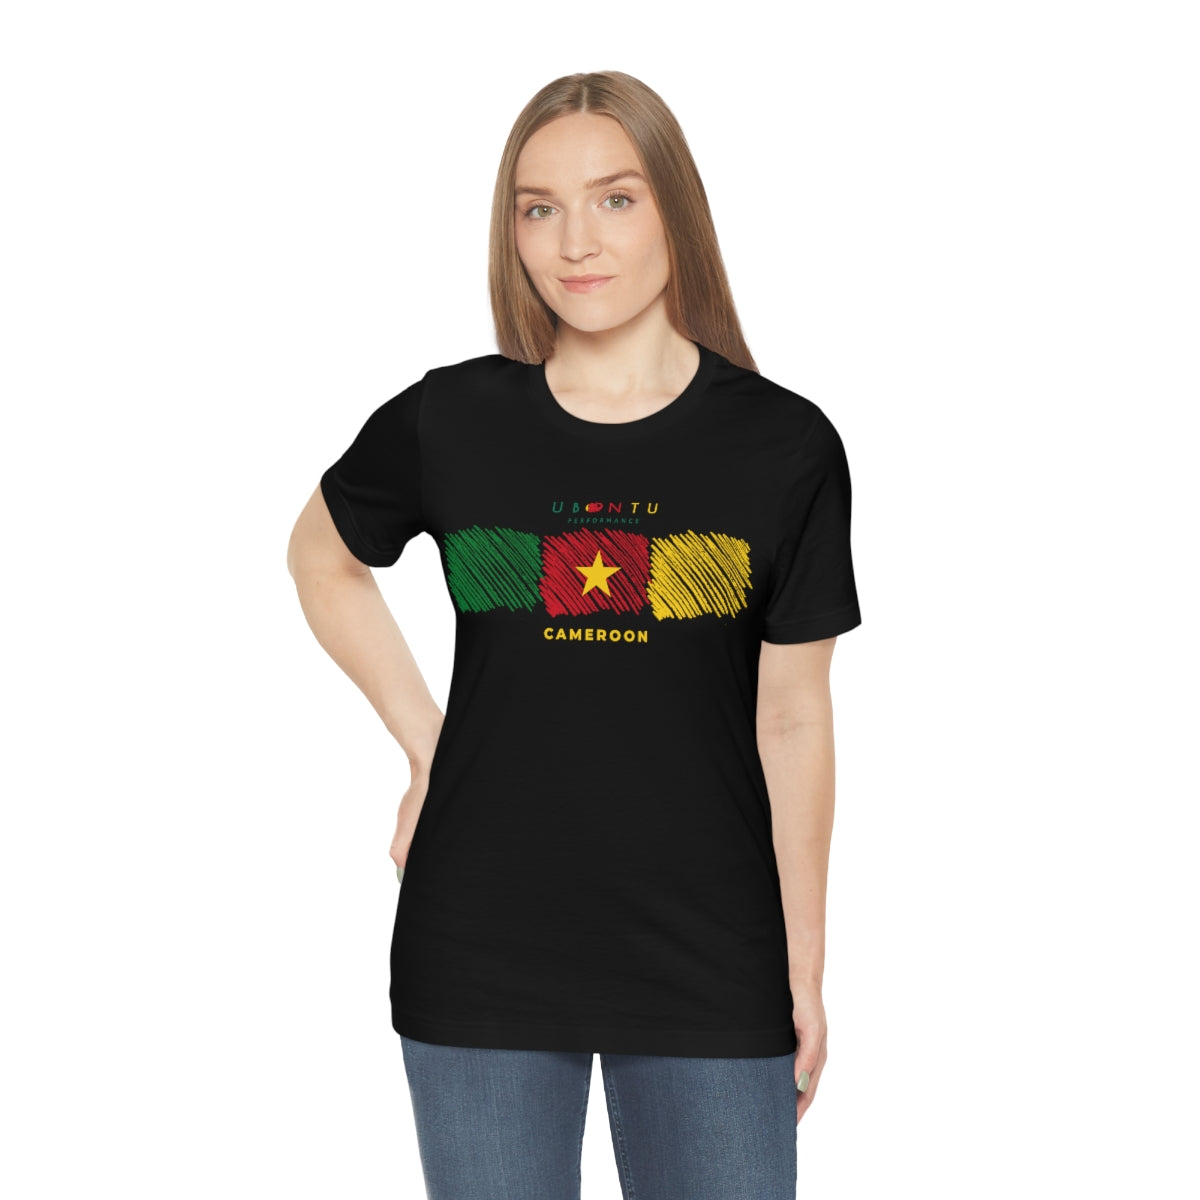 Cameroon  flag unisex men's women's tee football soccer fans  world cup gift t shirt